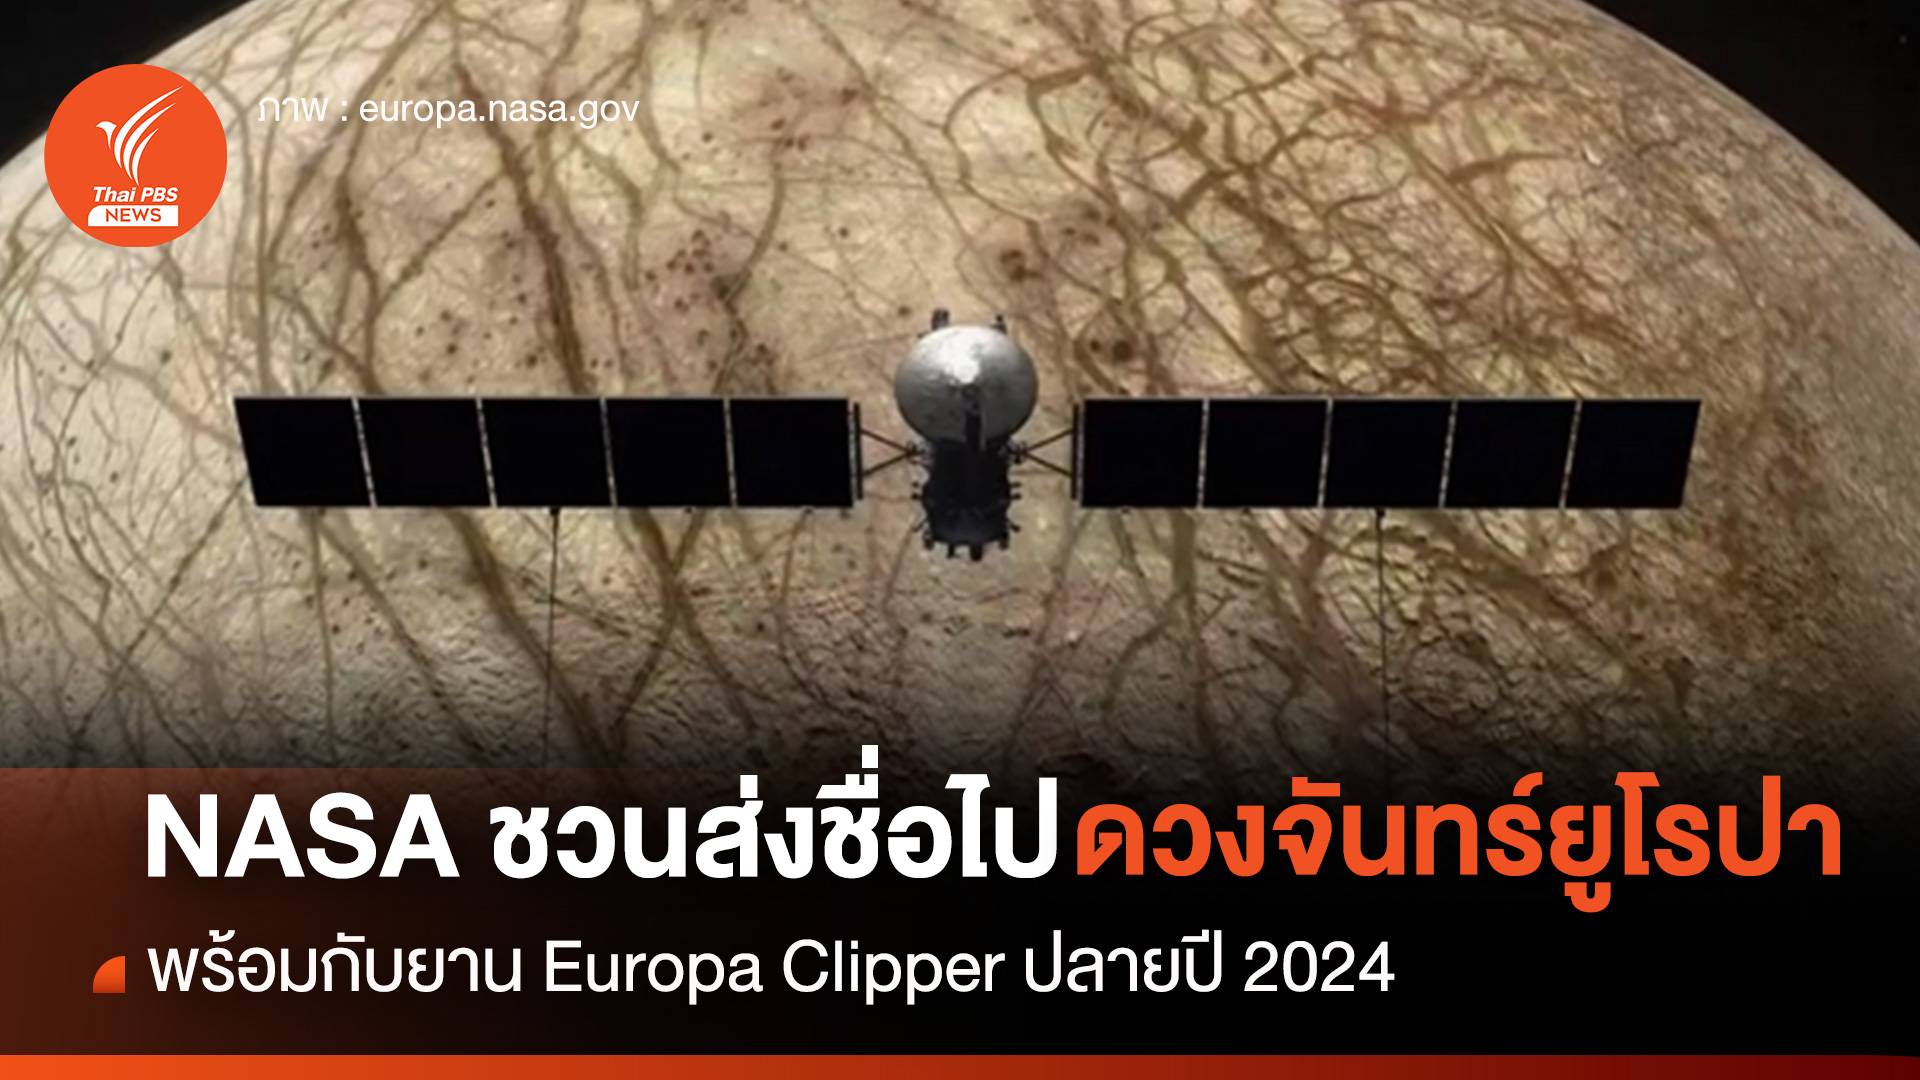 NASA ชวนส่งชื่อไป "ดวงจันทร์ยูโรปา" พร้อมยาน Europa Clipper ปลายปี 2024